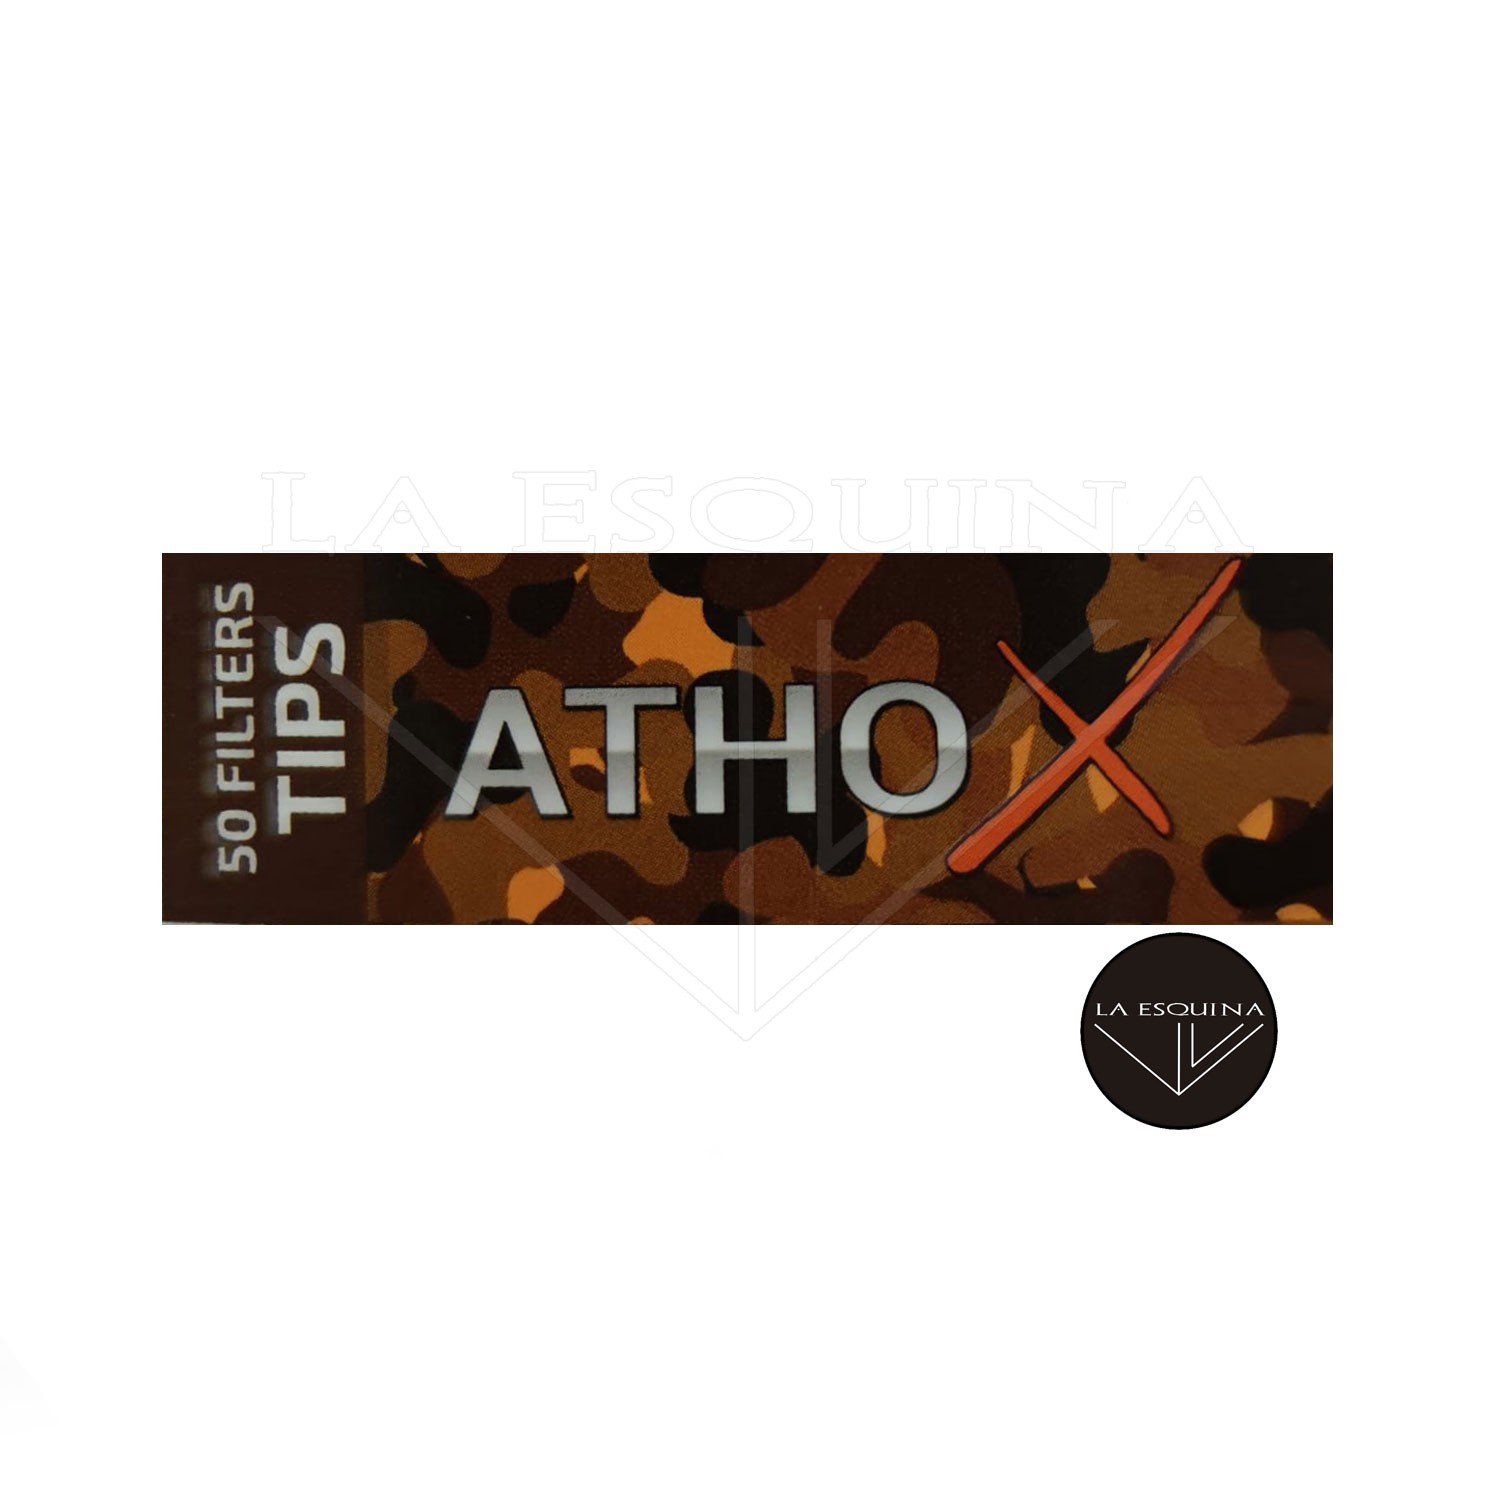 Filtros ATHOX Unbleached Tips Carton